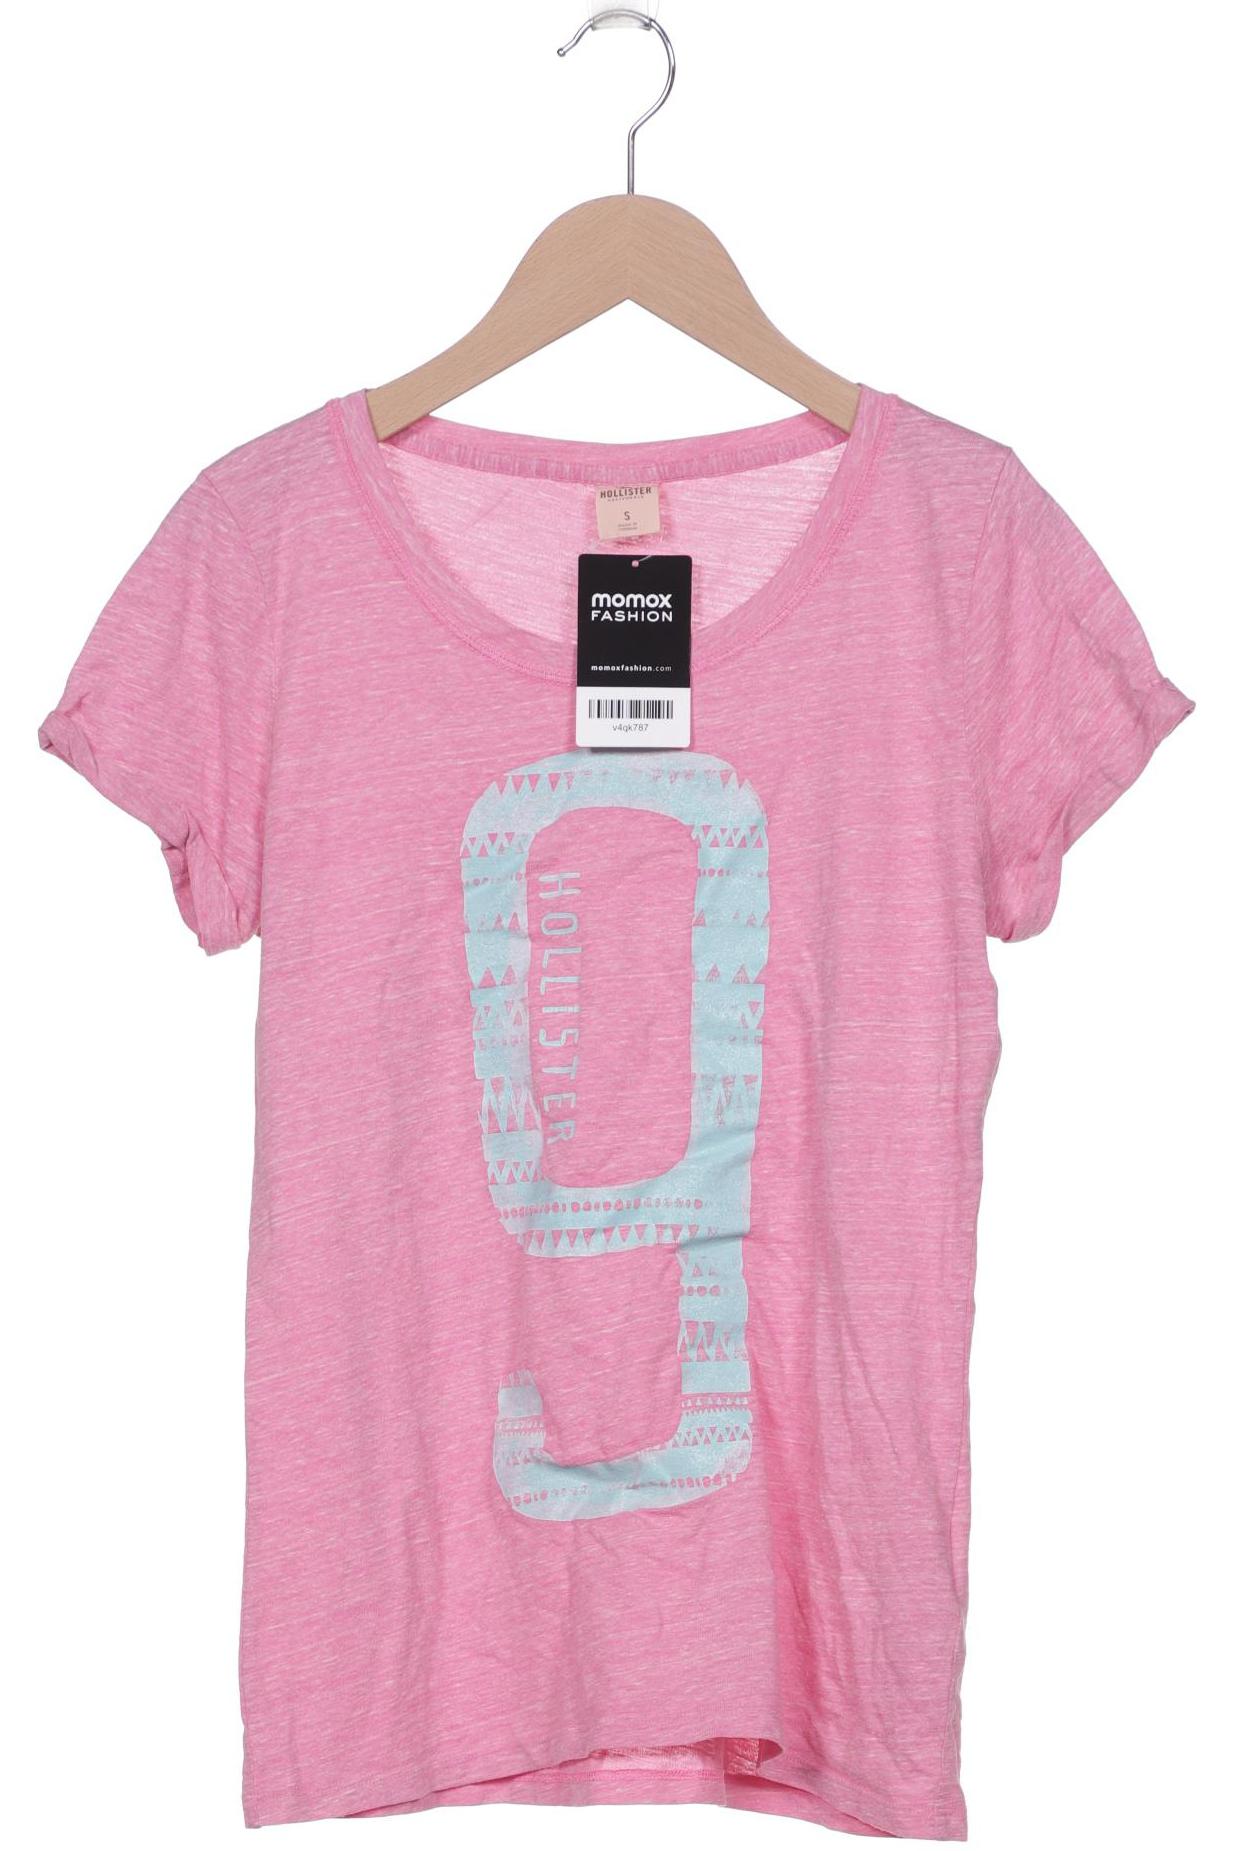 Hollister Damen T-Shirt, pink von Hollister